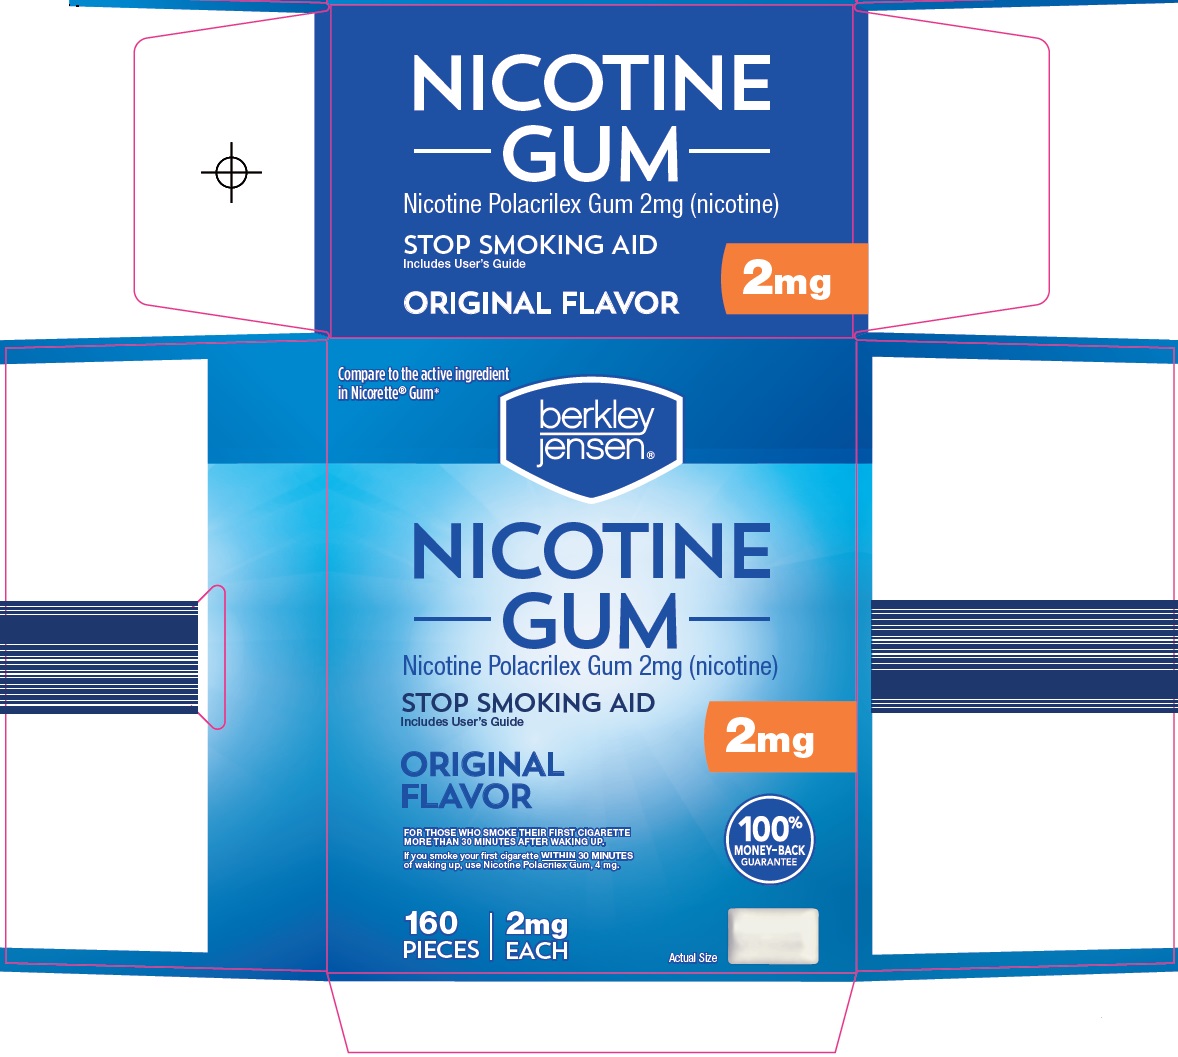 029d3-nicotine-gum-carton-image-1